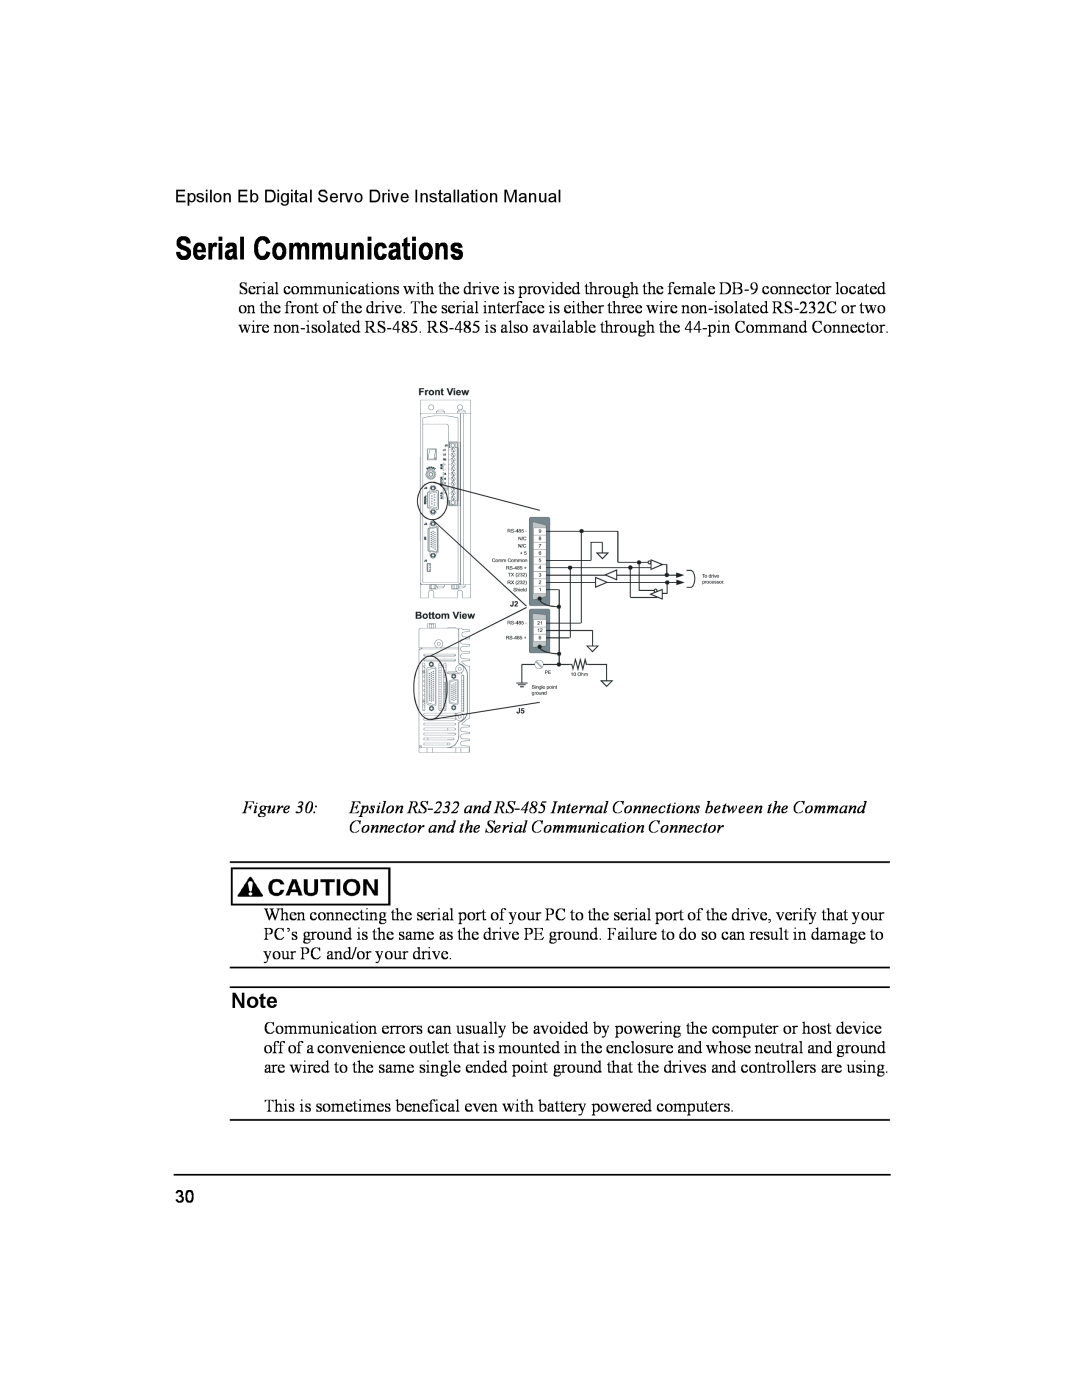 Emerson 400501-05, Epsilon Eb Digital Servo Drive installation manual Serial Communications 